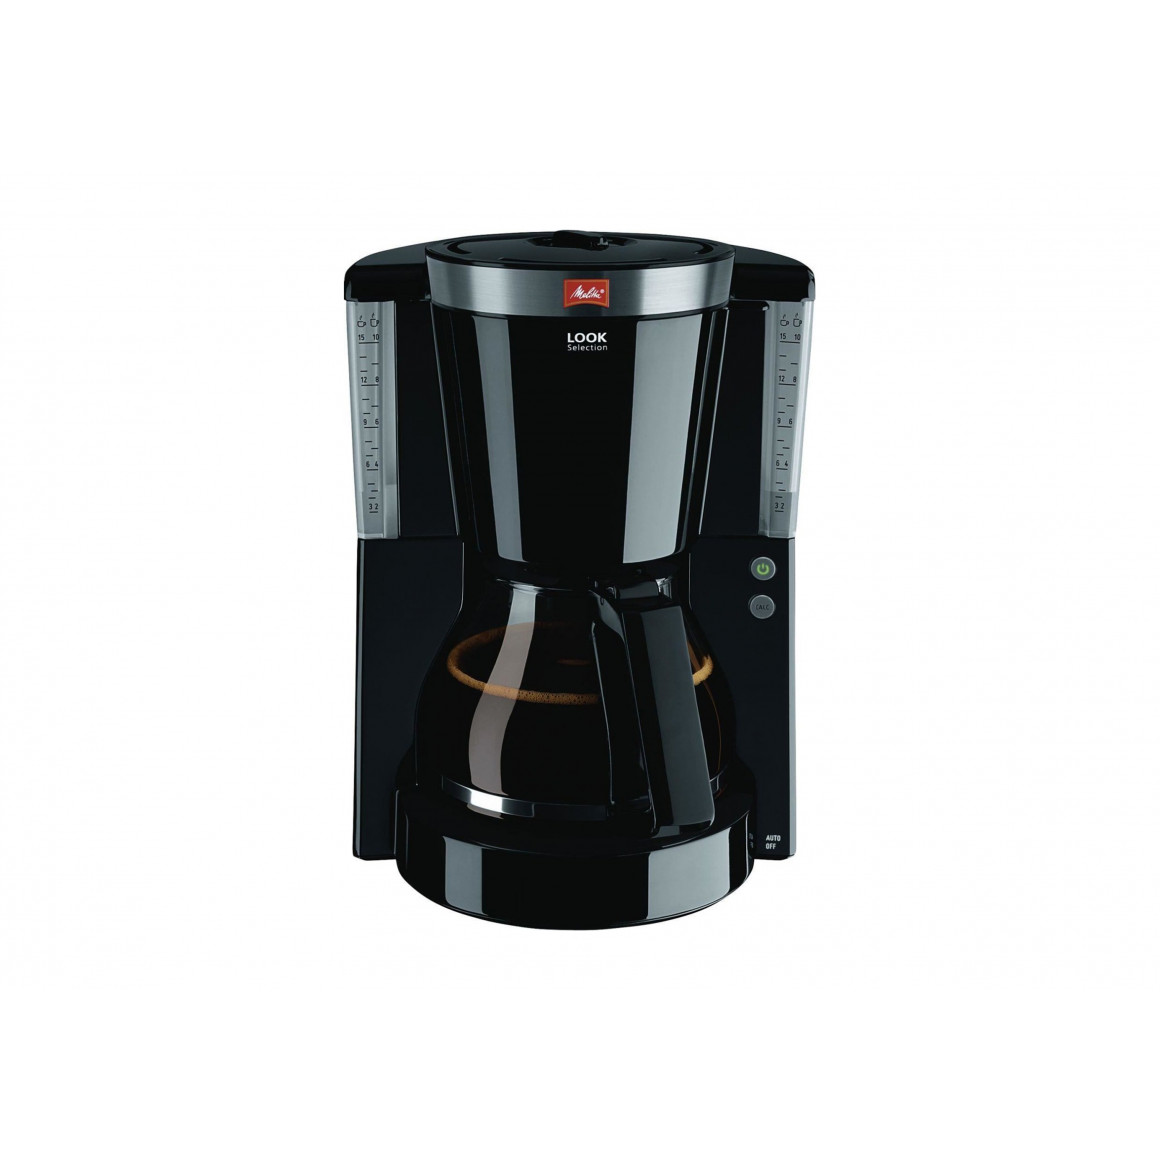 Melitta M 170 M gastronomic Filter Coffee Machine without glass jug 